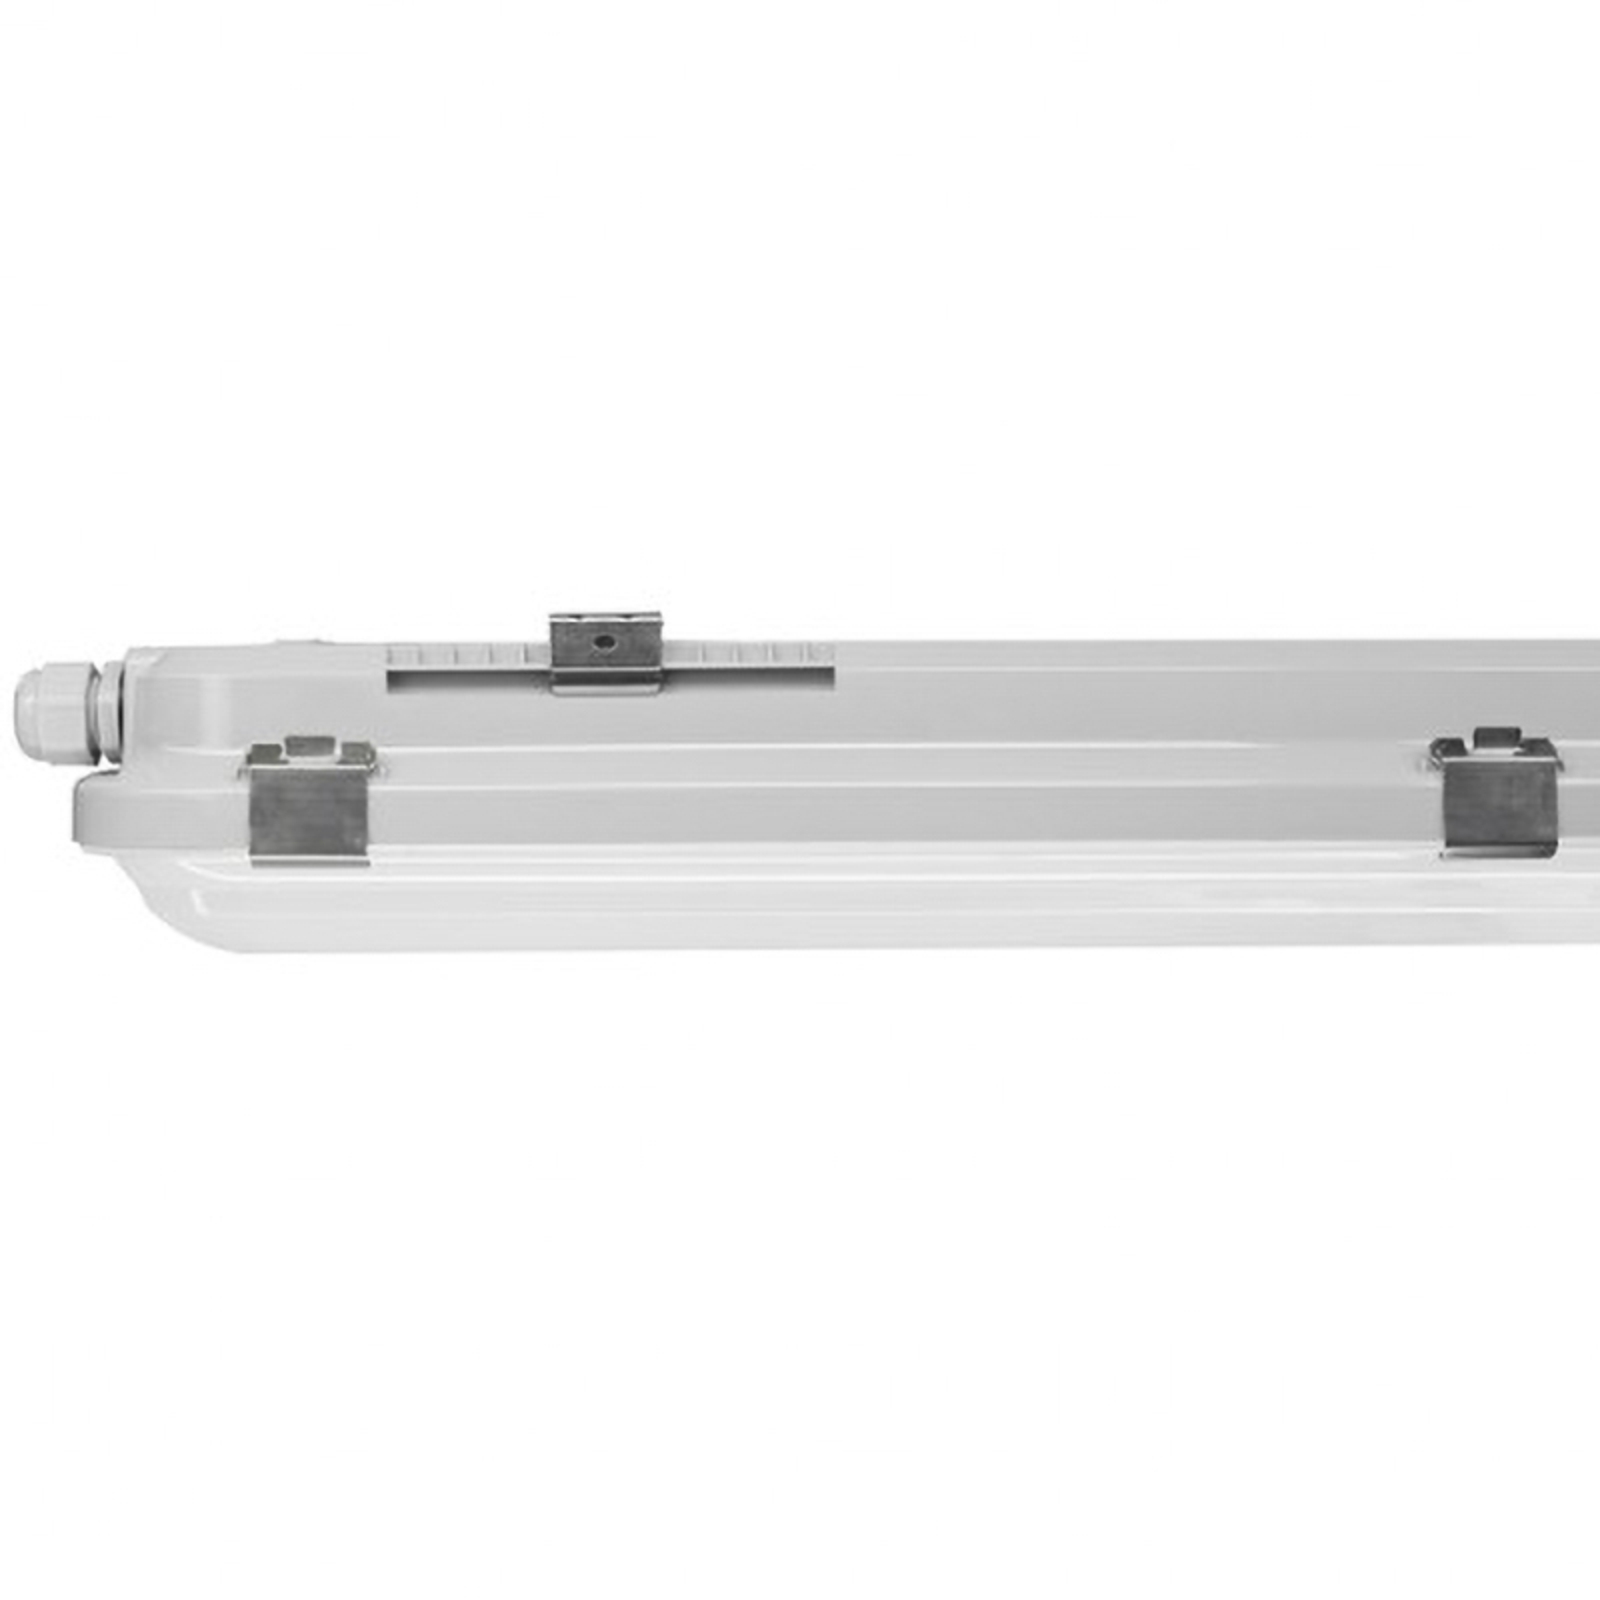 InnoGreen AQUOS 3.0 BASELine LED light 152cm 850